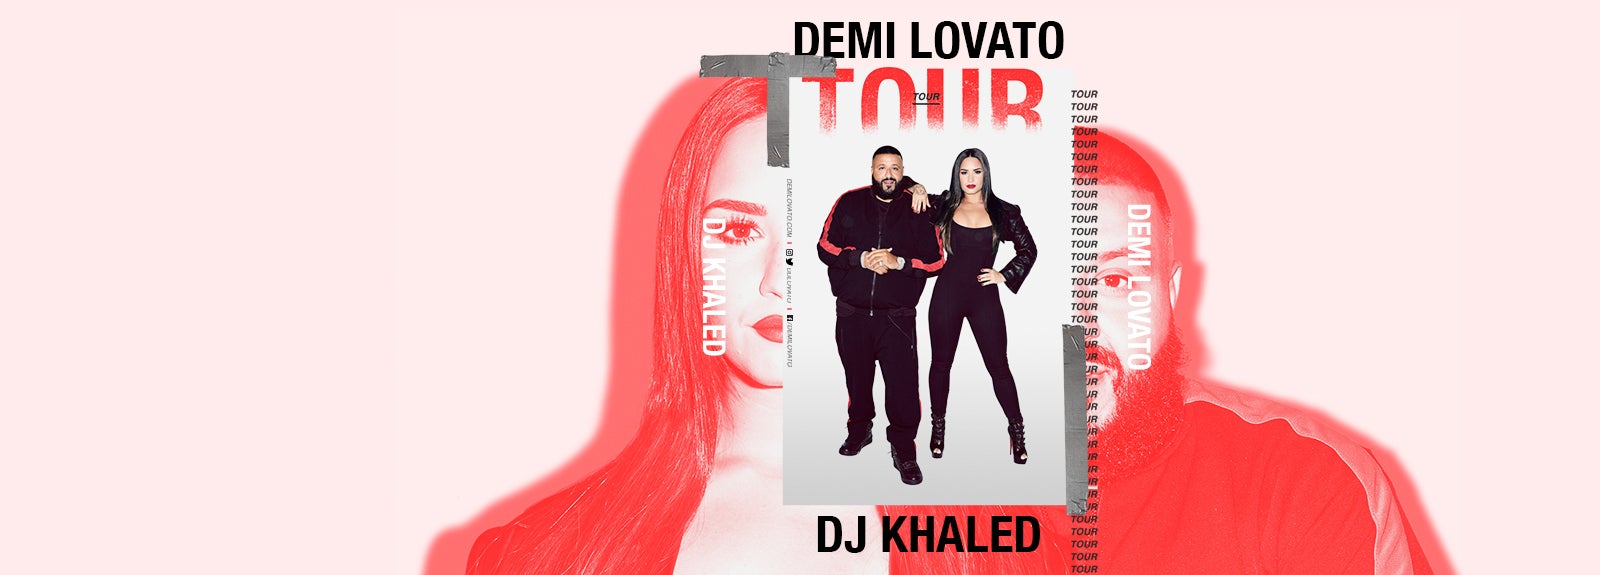 Demi Lovato & DJ Khaled